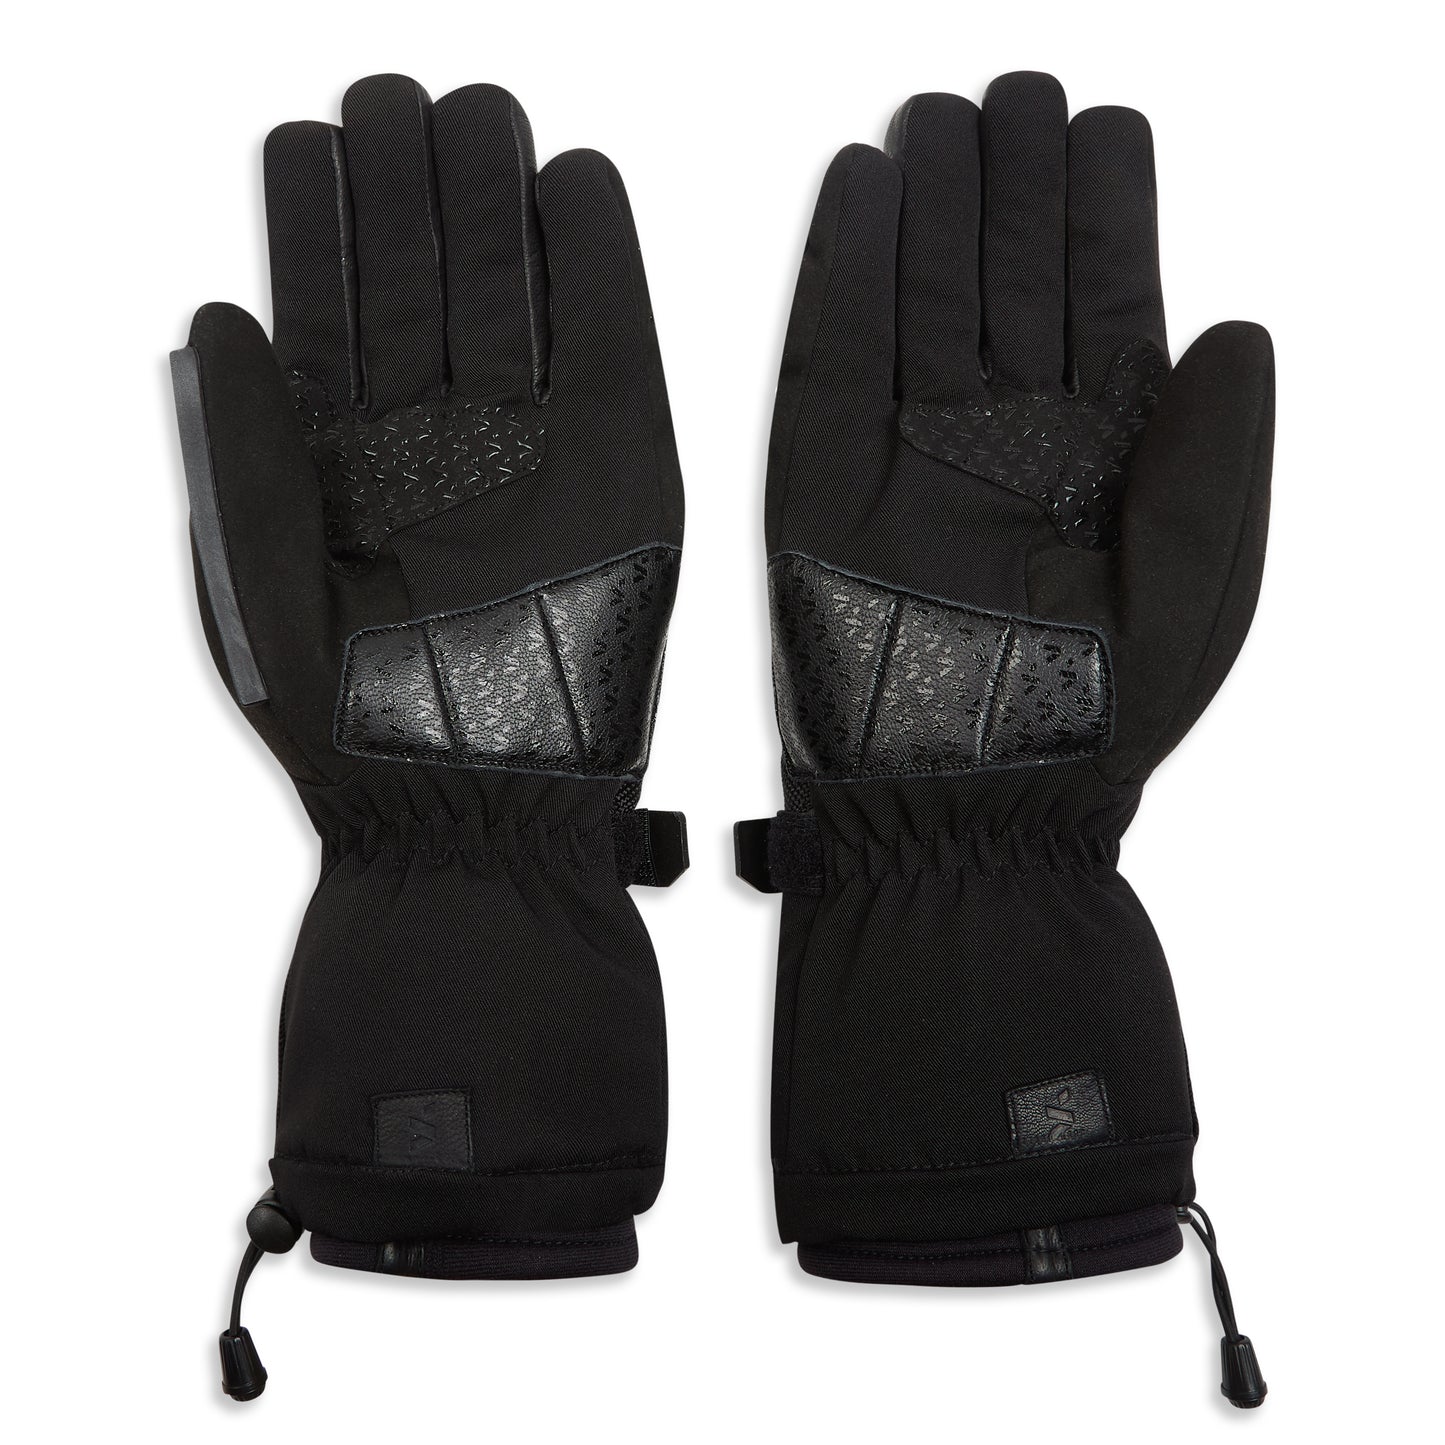 Spada Blizzard 2 Winter Motorcycle Gloves